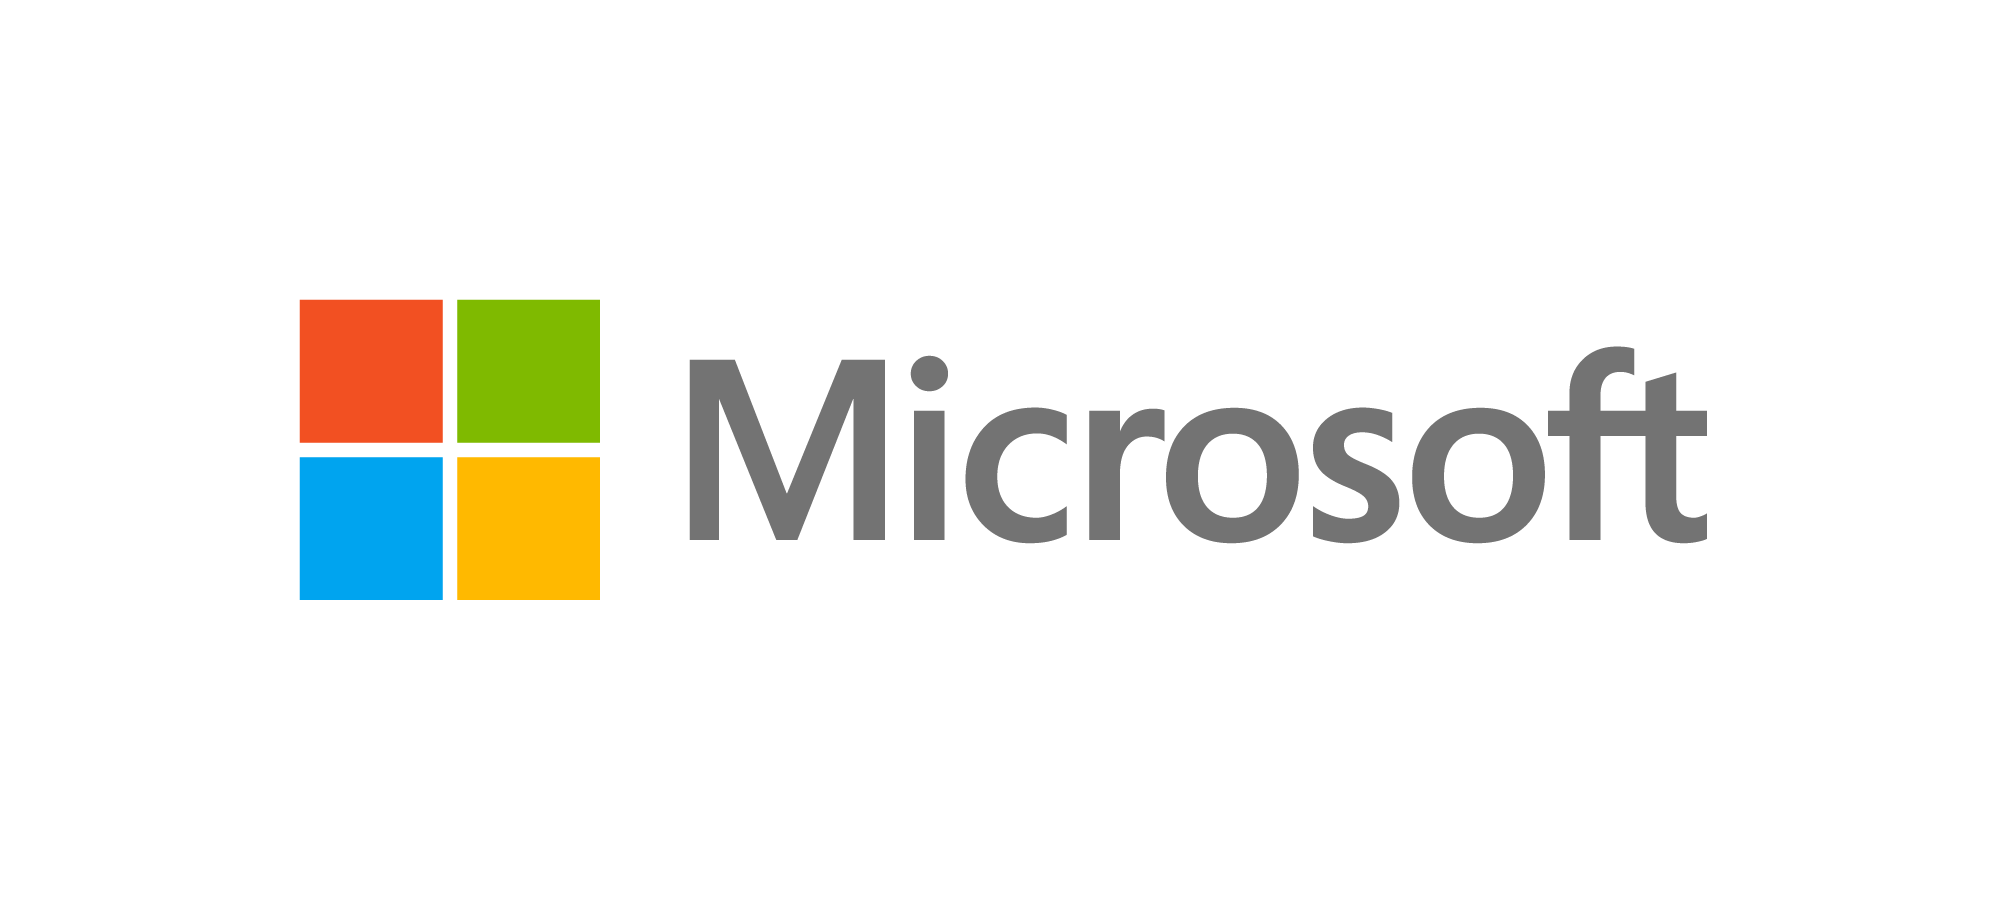 Microsoft.png - Microsoft, Transparent background PNG HD thumbnail